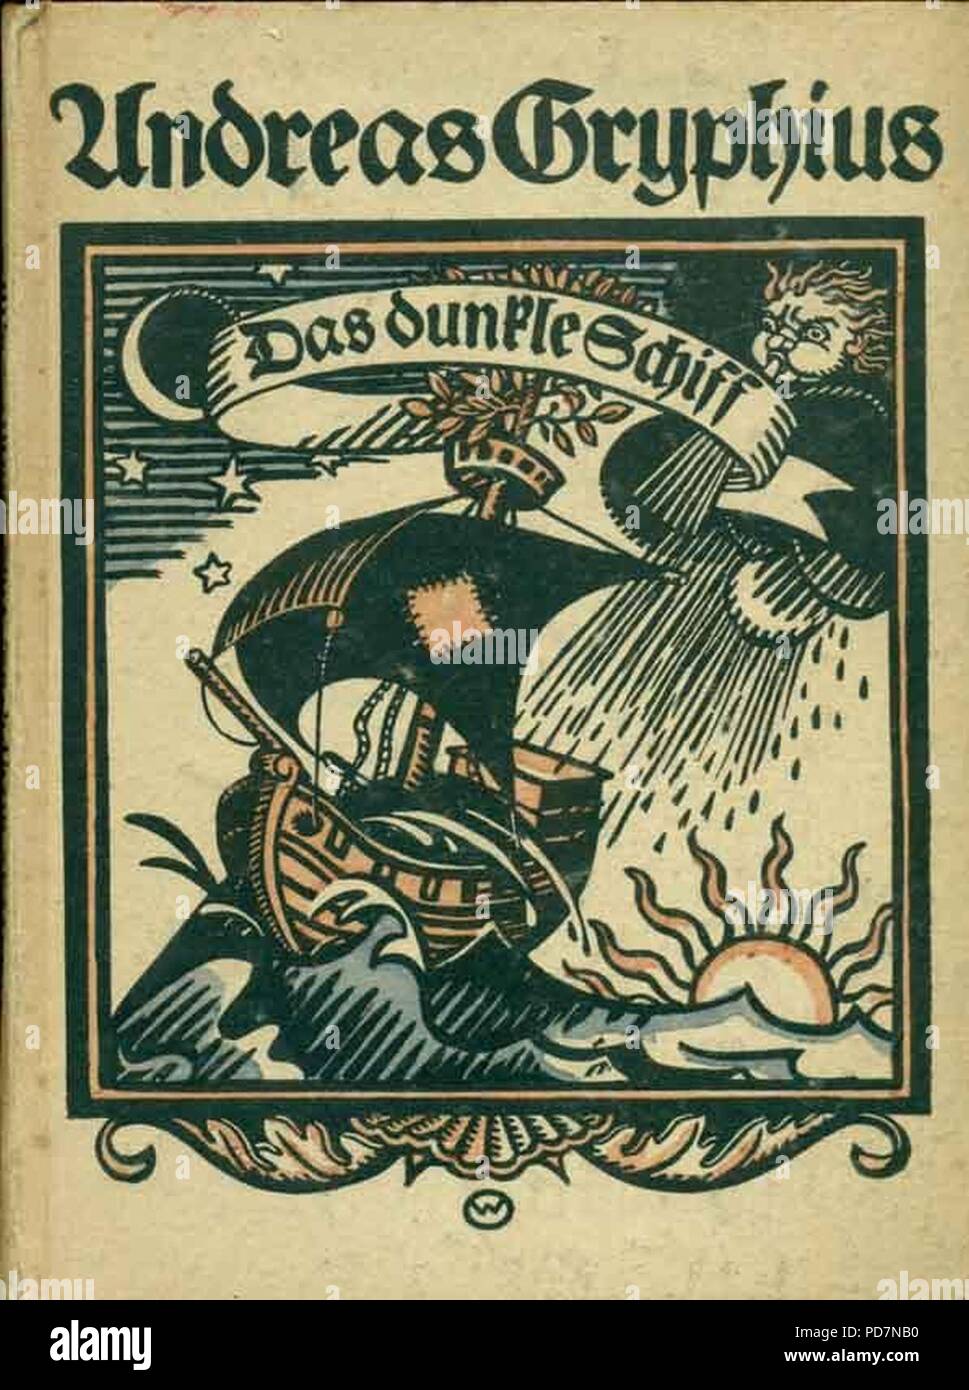 Andreas Gryphius - Das dunkle Schiff. Auserlesene Sonette, Gedichte épigramme, 1921. Banque D'Images